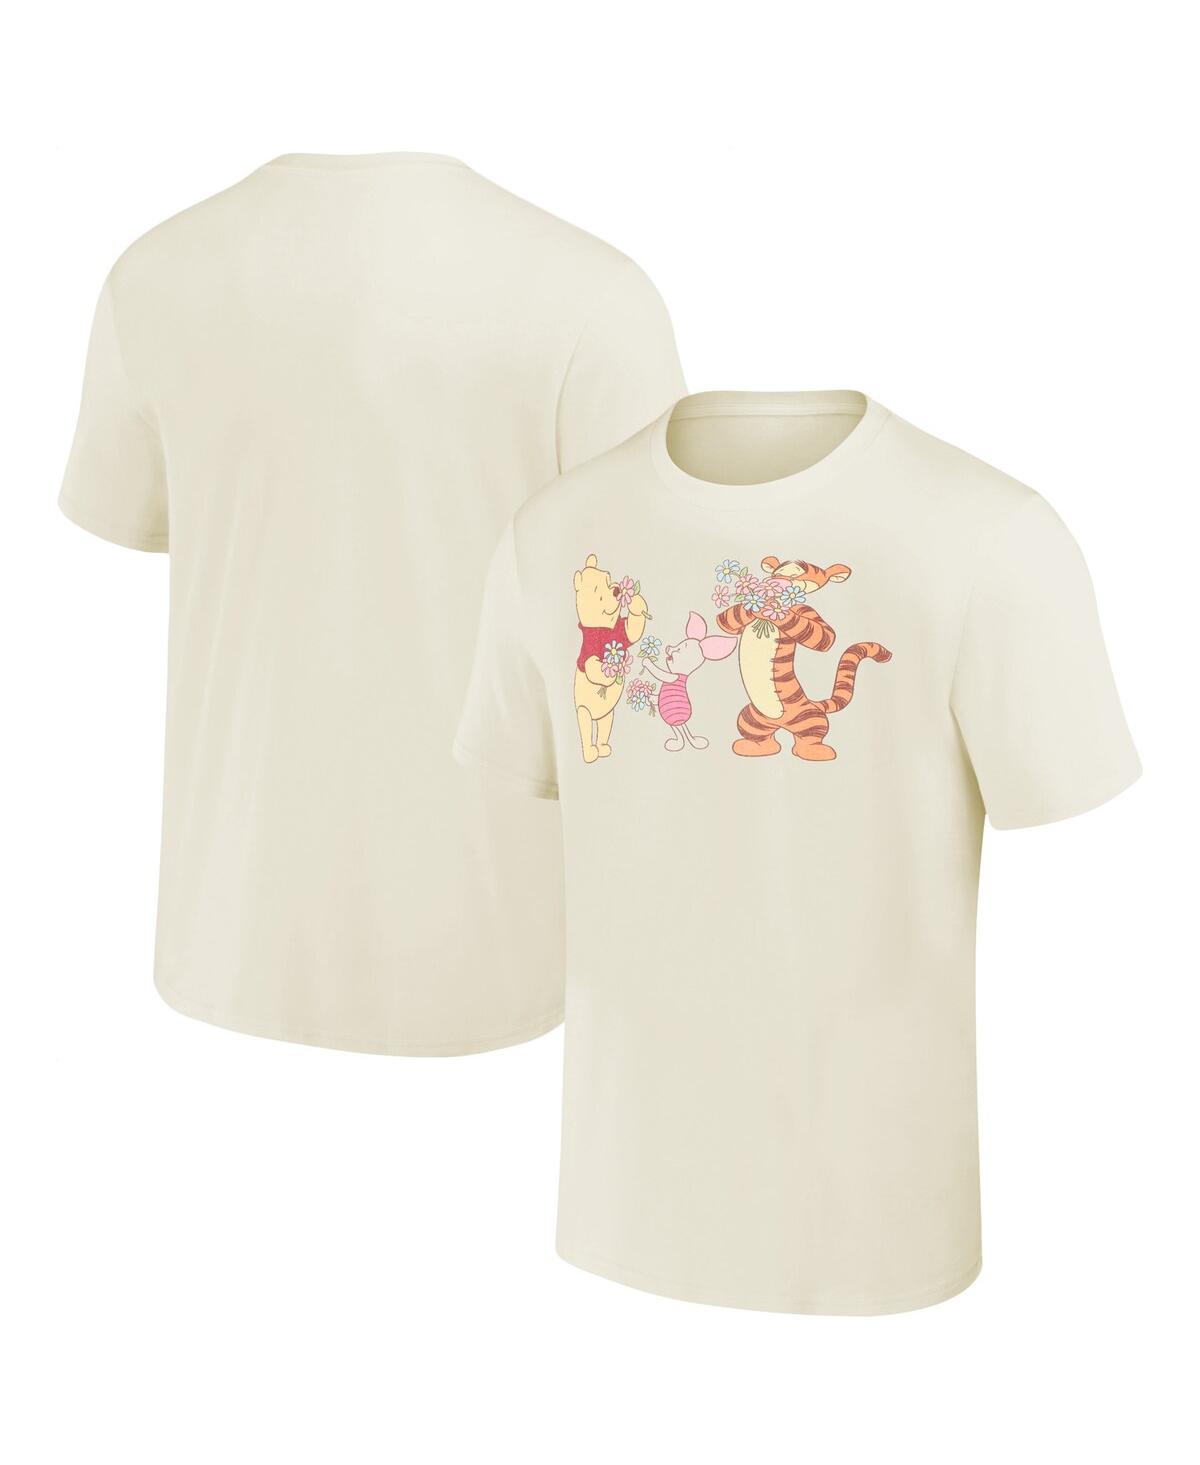 Men's and Women's Mad Engine Cream Winnie the Pooh Flowers T-shirt - Cream